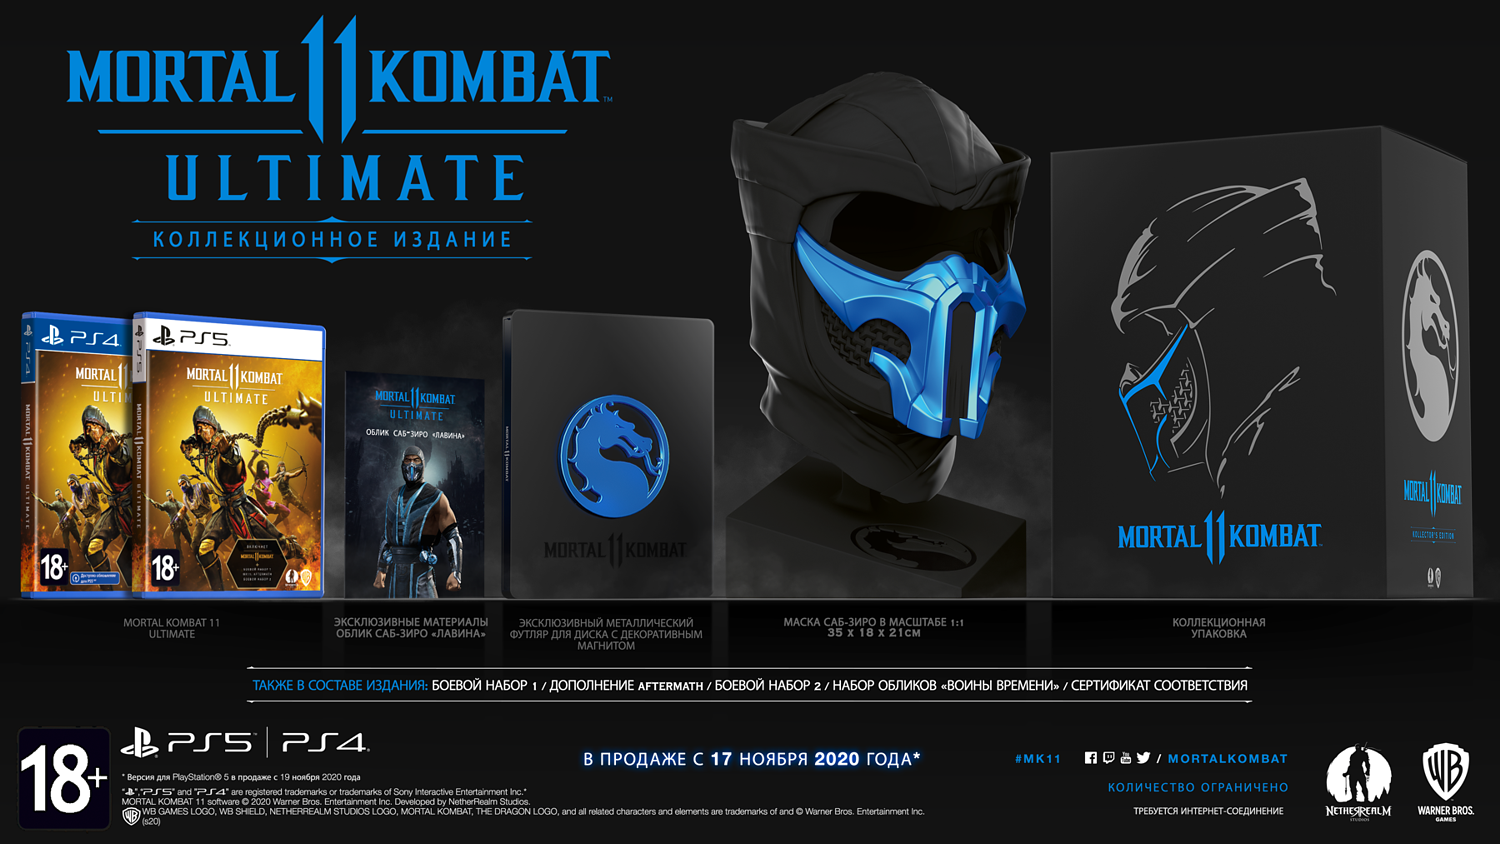 Mortal Kombat 11 Ultimate. Kollector's Edition [PS5] mortal kombat 11 ultimate kollector s edition [xbox]